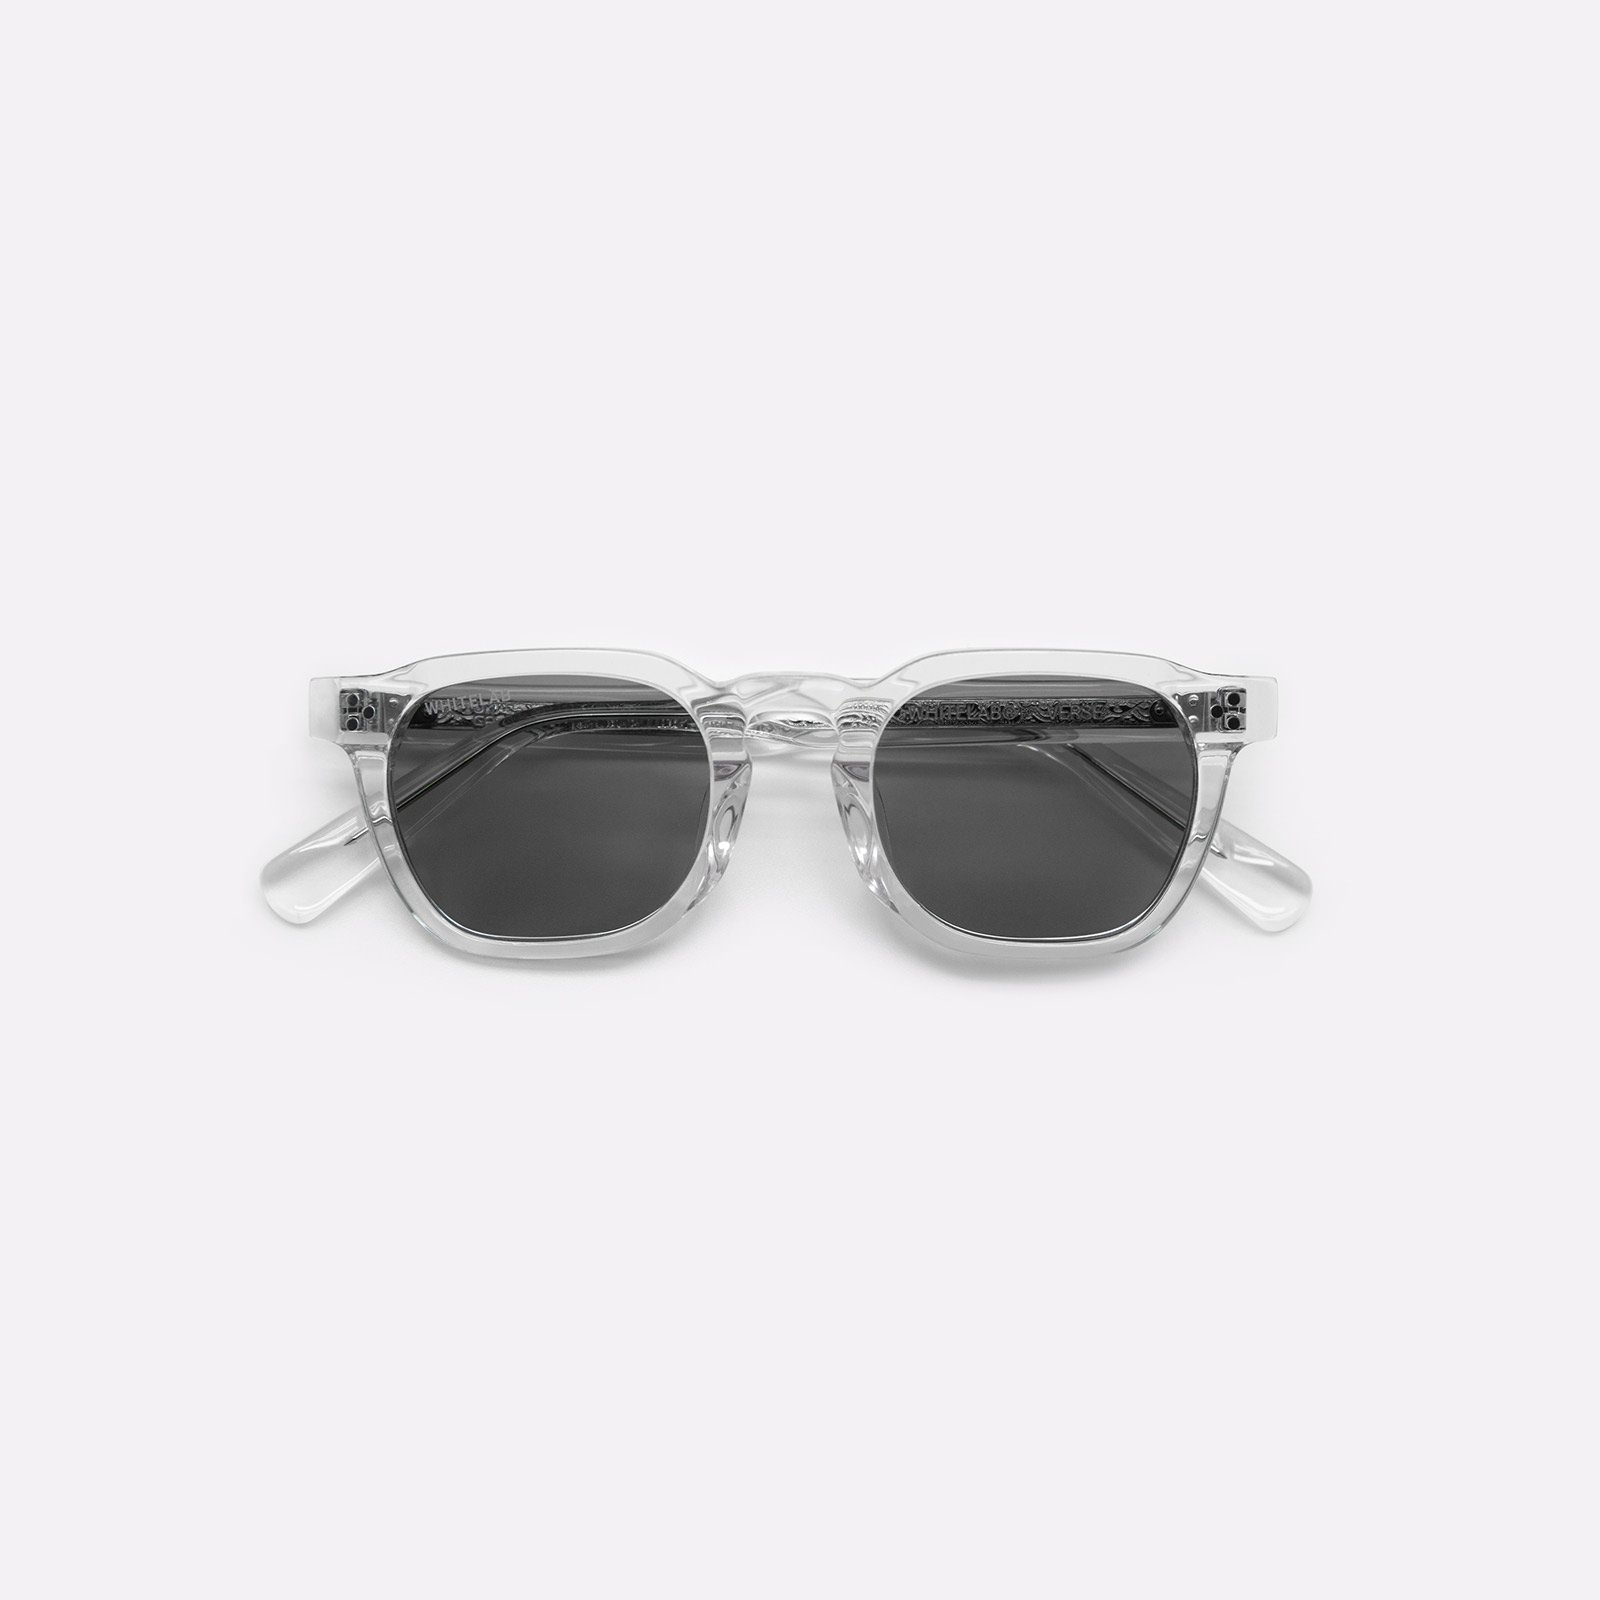 Солнцезащитные очки White Lab Verse (Verse Clean/grey)  - цена, описание, фото 1